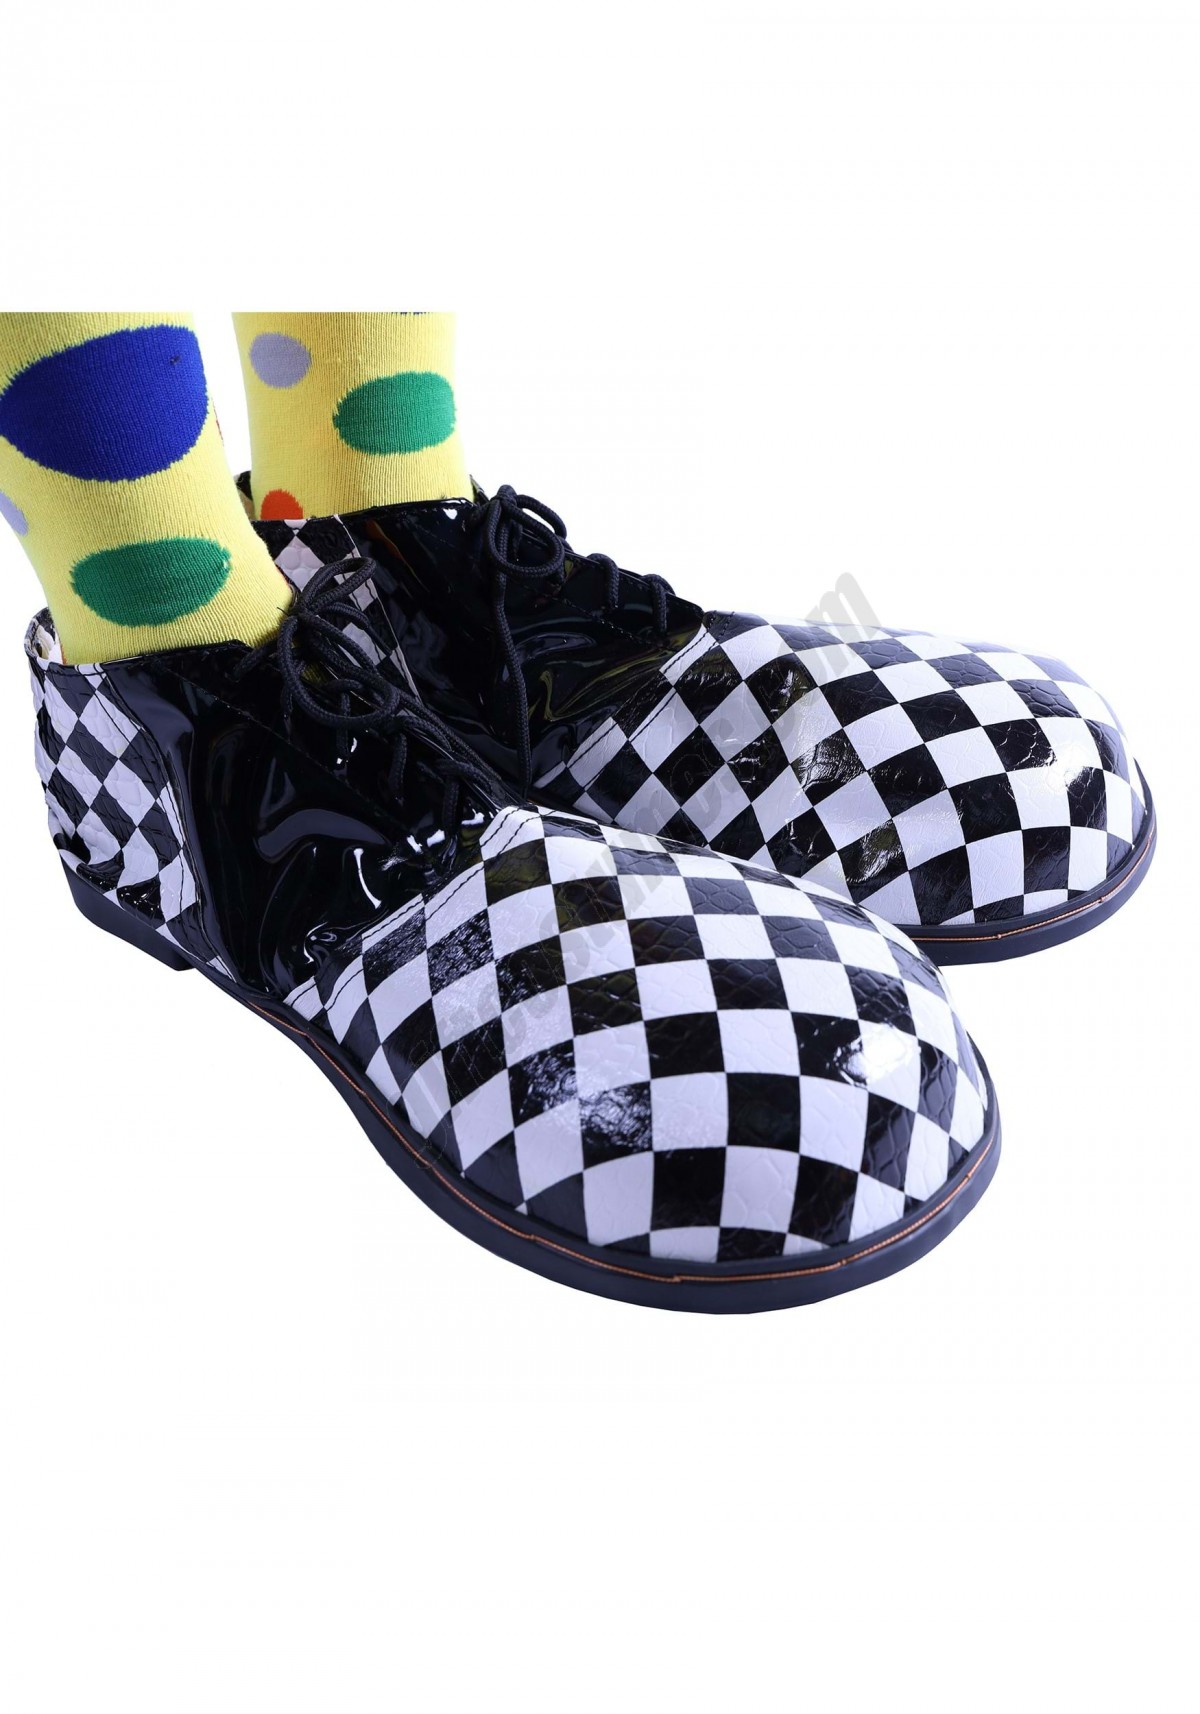 Checkered Jumbo Clown Shoe Promotions - -0